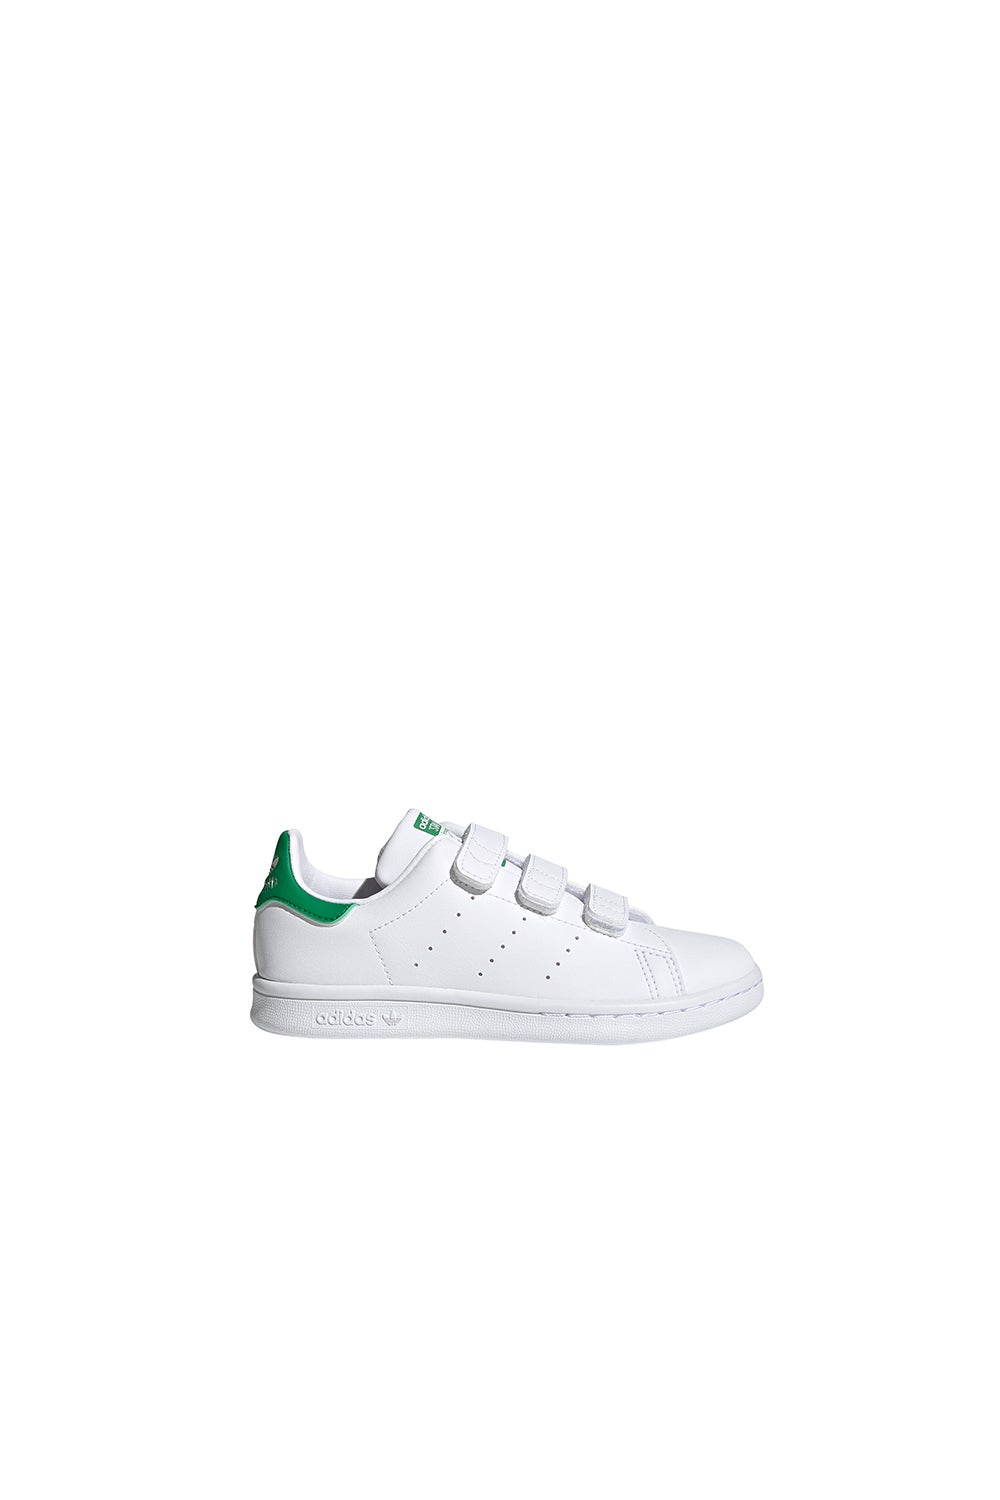 adidas Stan Smith Kids Shoes Cloud White/Green